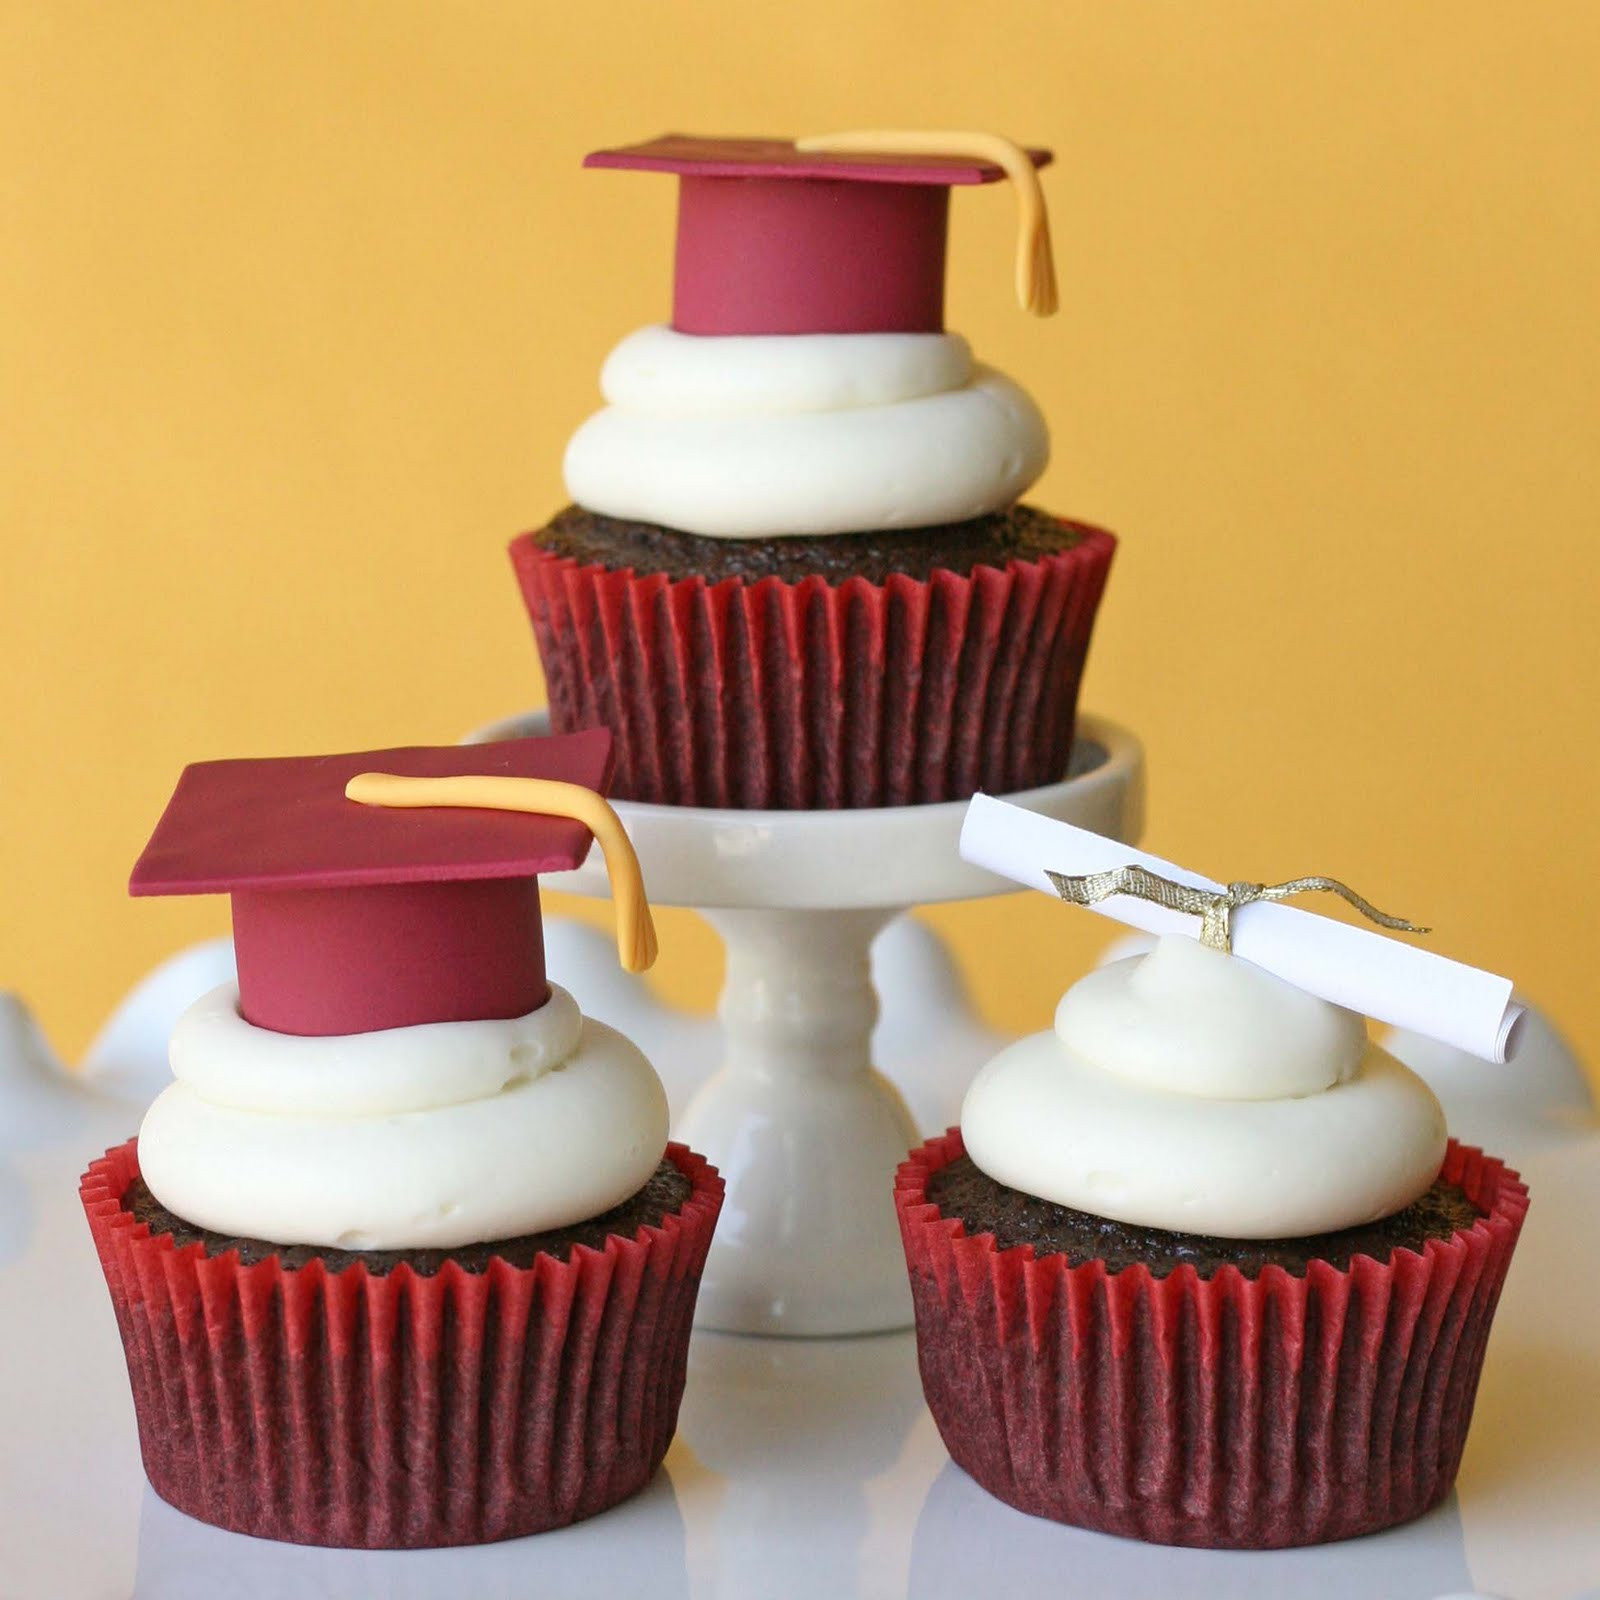 Cake Ideas For Graduation Party
 Graduation Cupcakes and How To Make Fondant Graduation